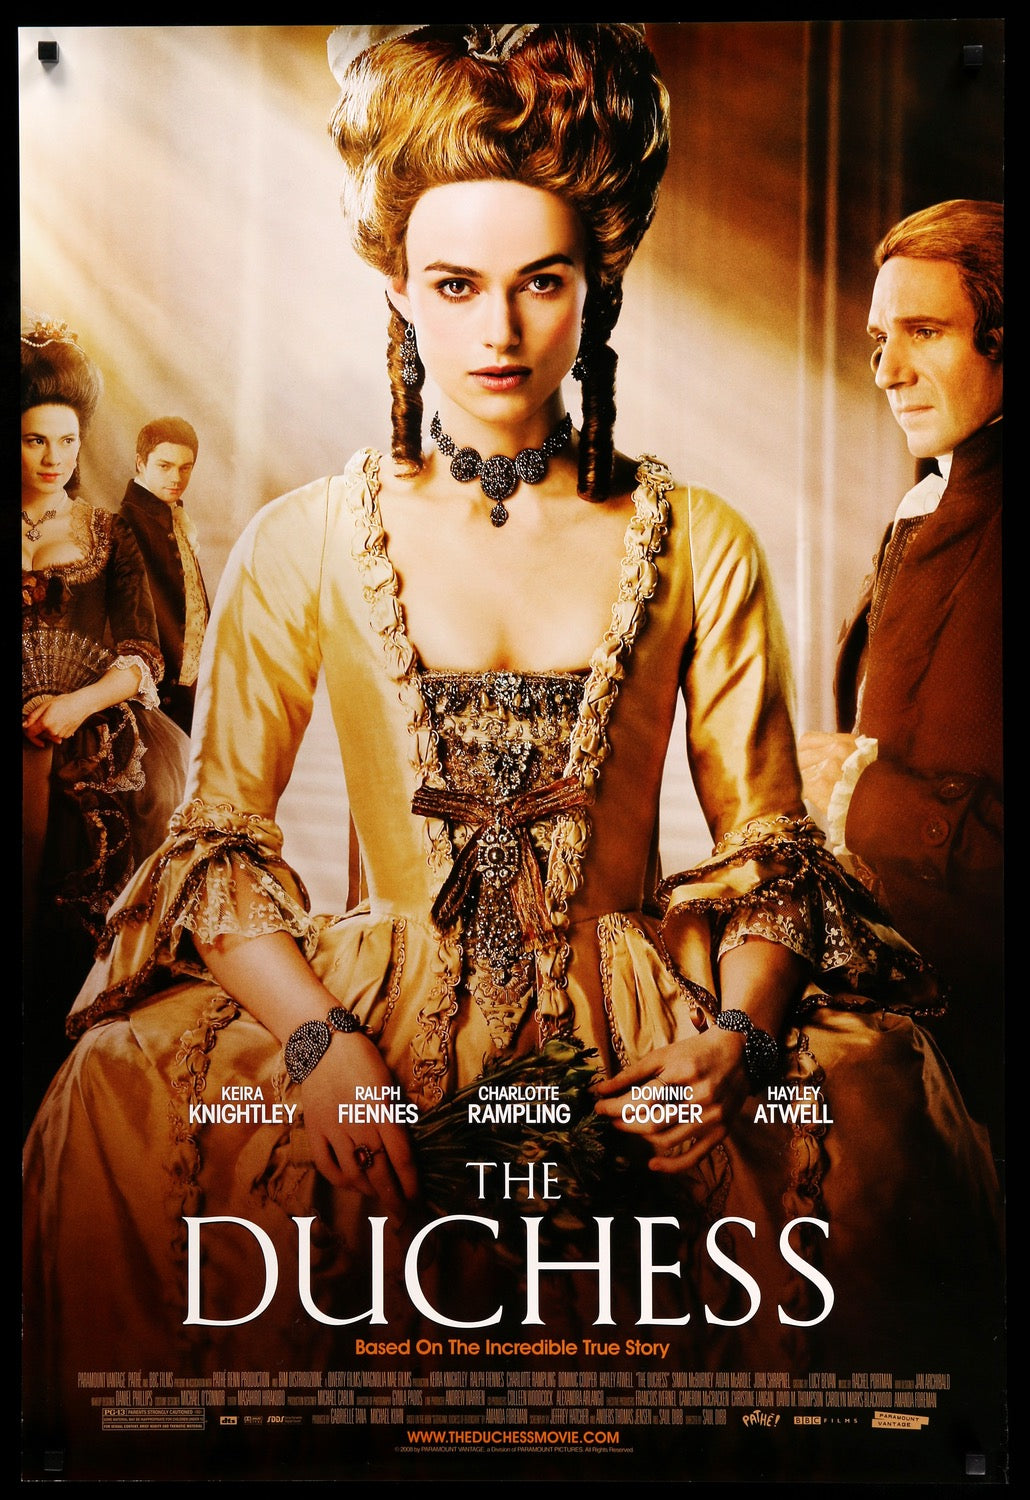 Duchess (2008) original movie poster for sale at Original Film Art